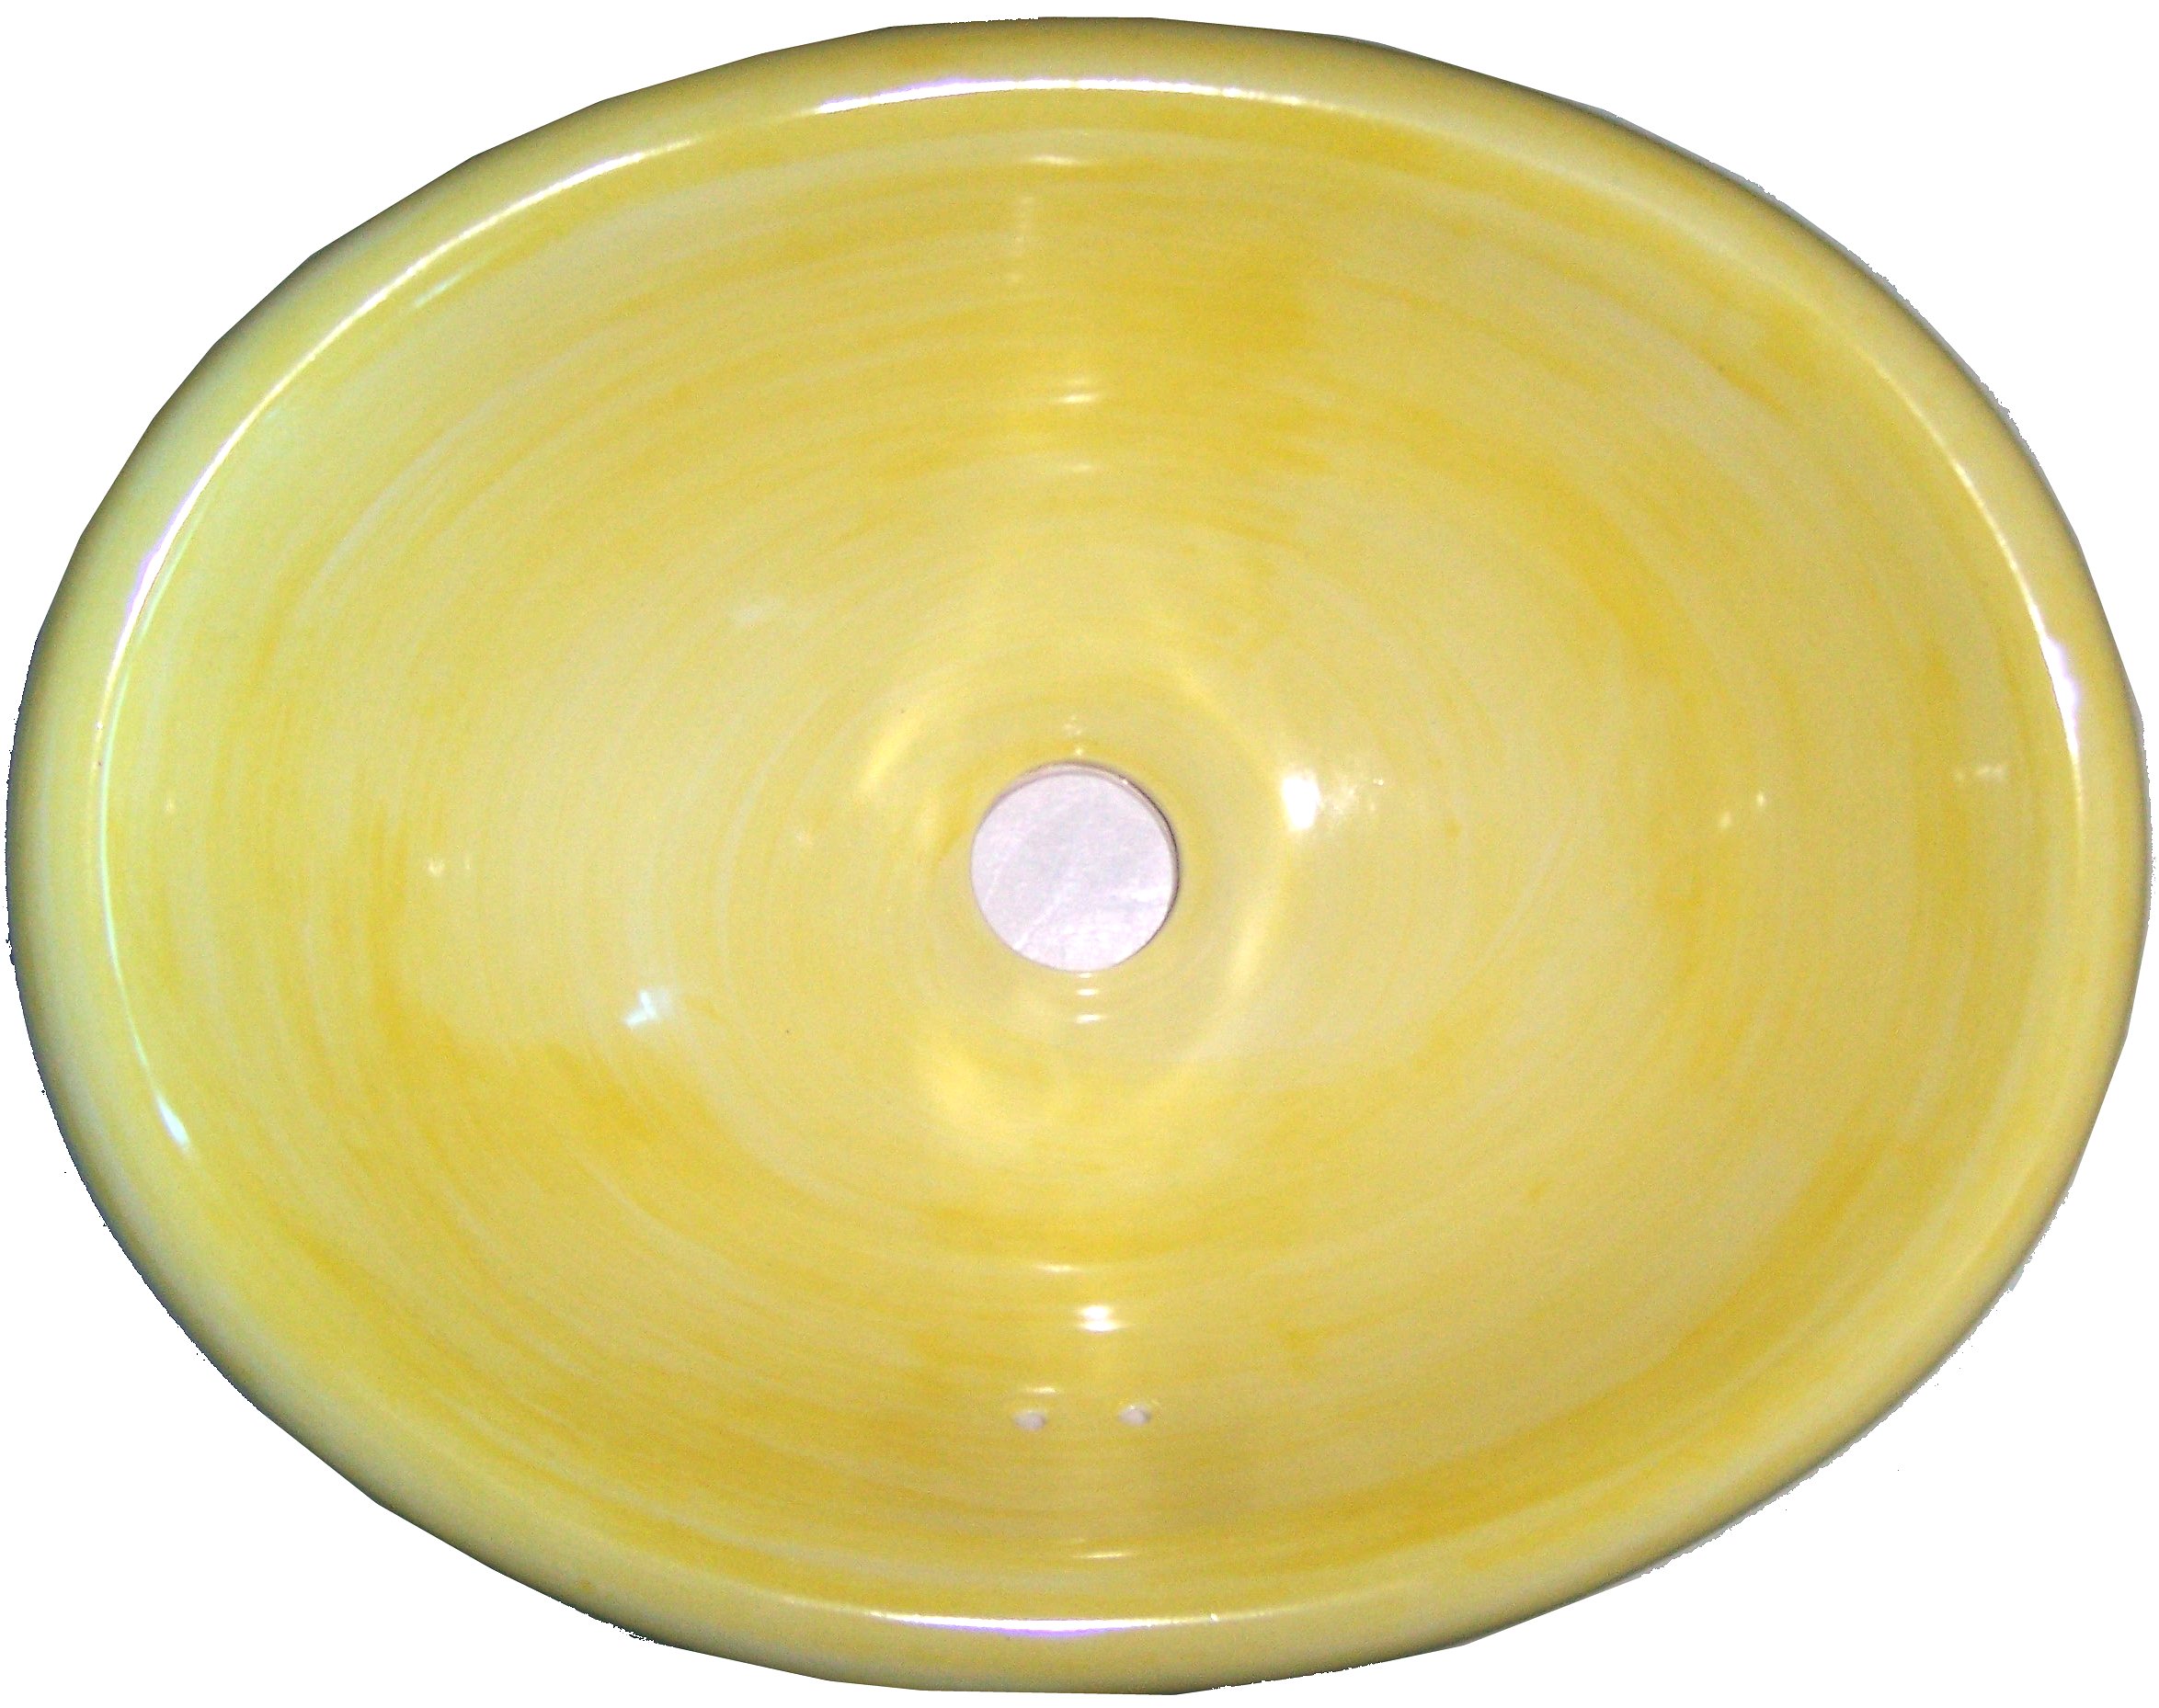 Big Washed Yellow Talavera Ceramic Sink